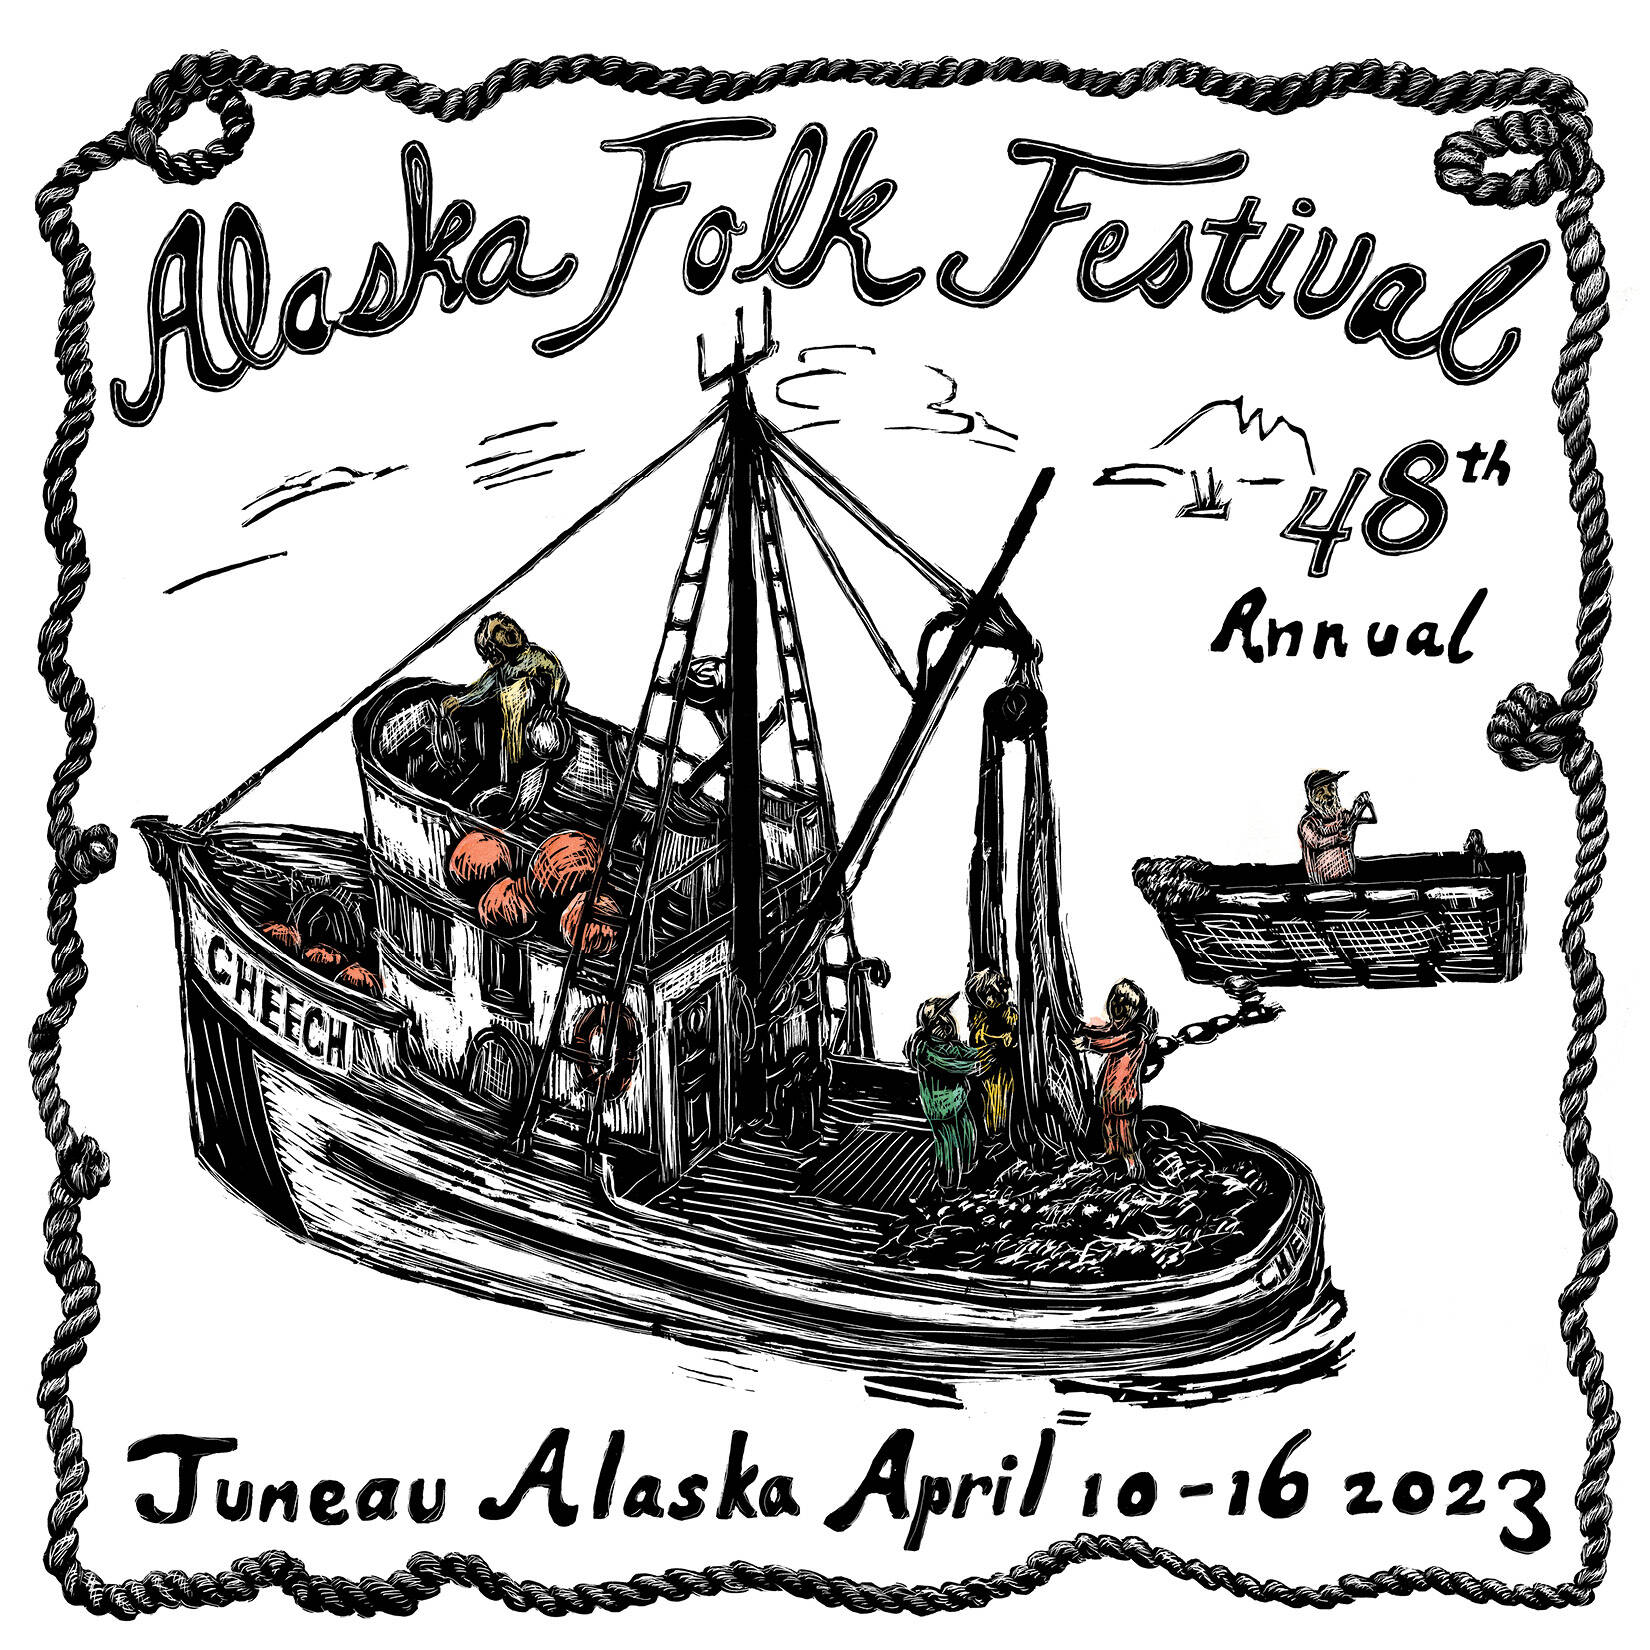 Rebecca Poulson’s artwork for this year’s Alaska Folk Festival taking place on April 10-16. (Courtesy Photo / Rebecca Poulson)